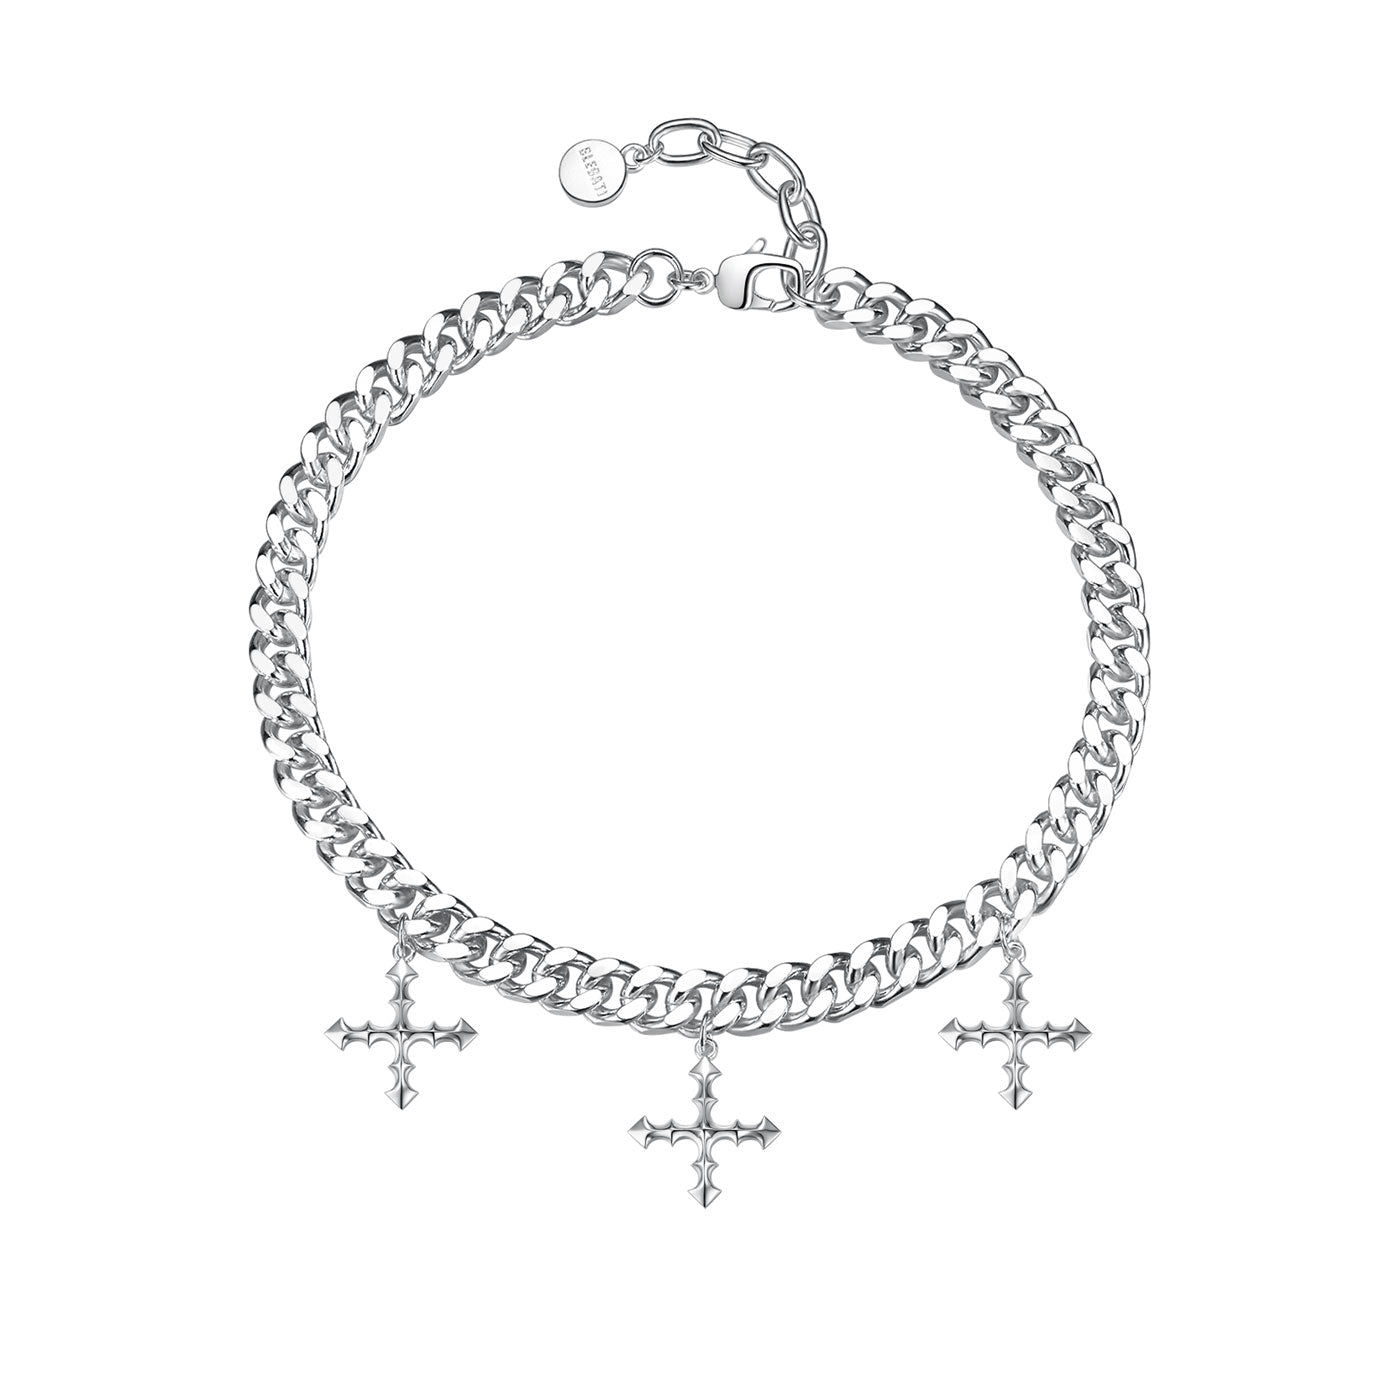 silver cross choker necklace, three crosses pendant